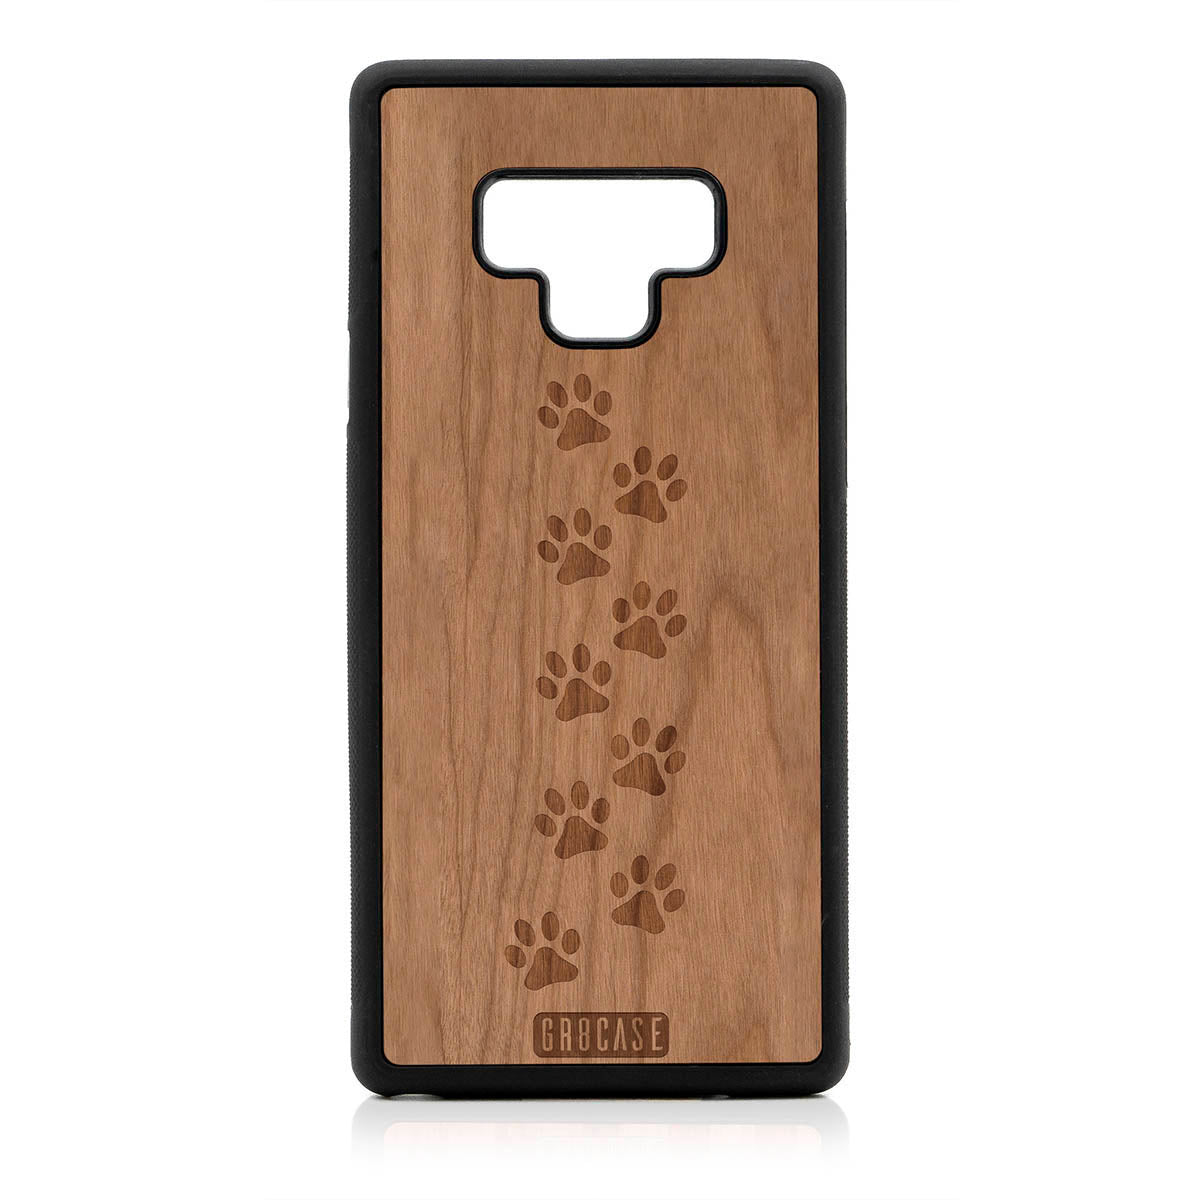 Paw Prints Design Wood Case Samsung Galaxy Note 9 by GR8CASE